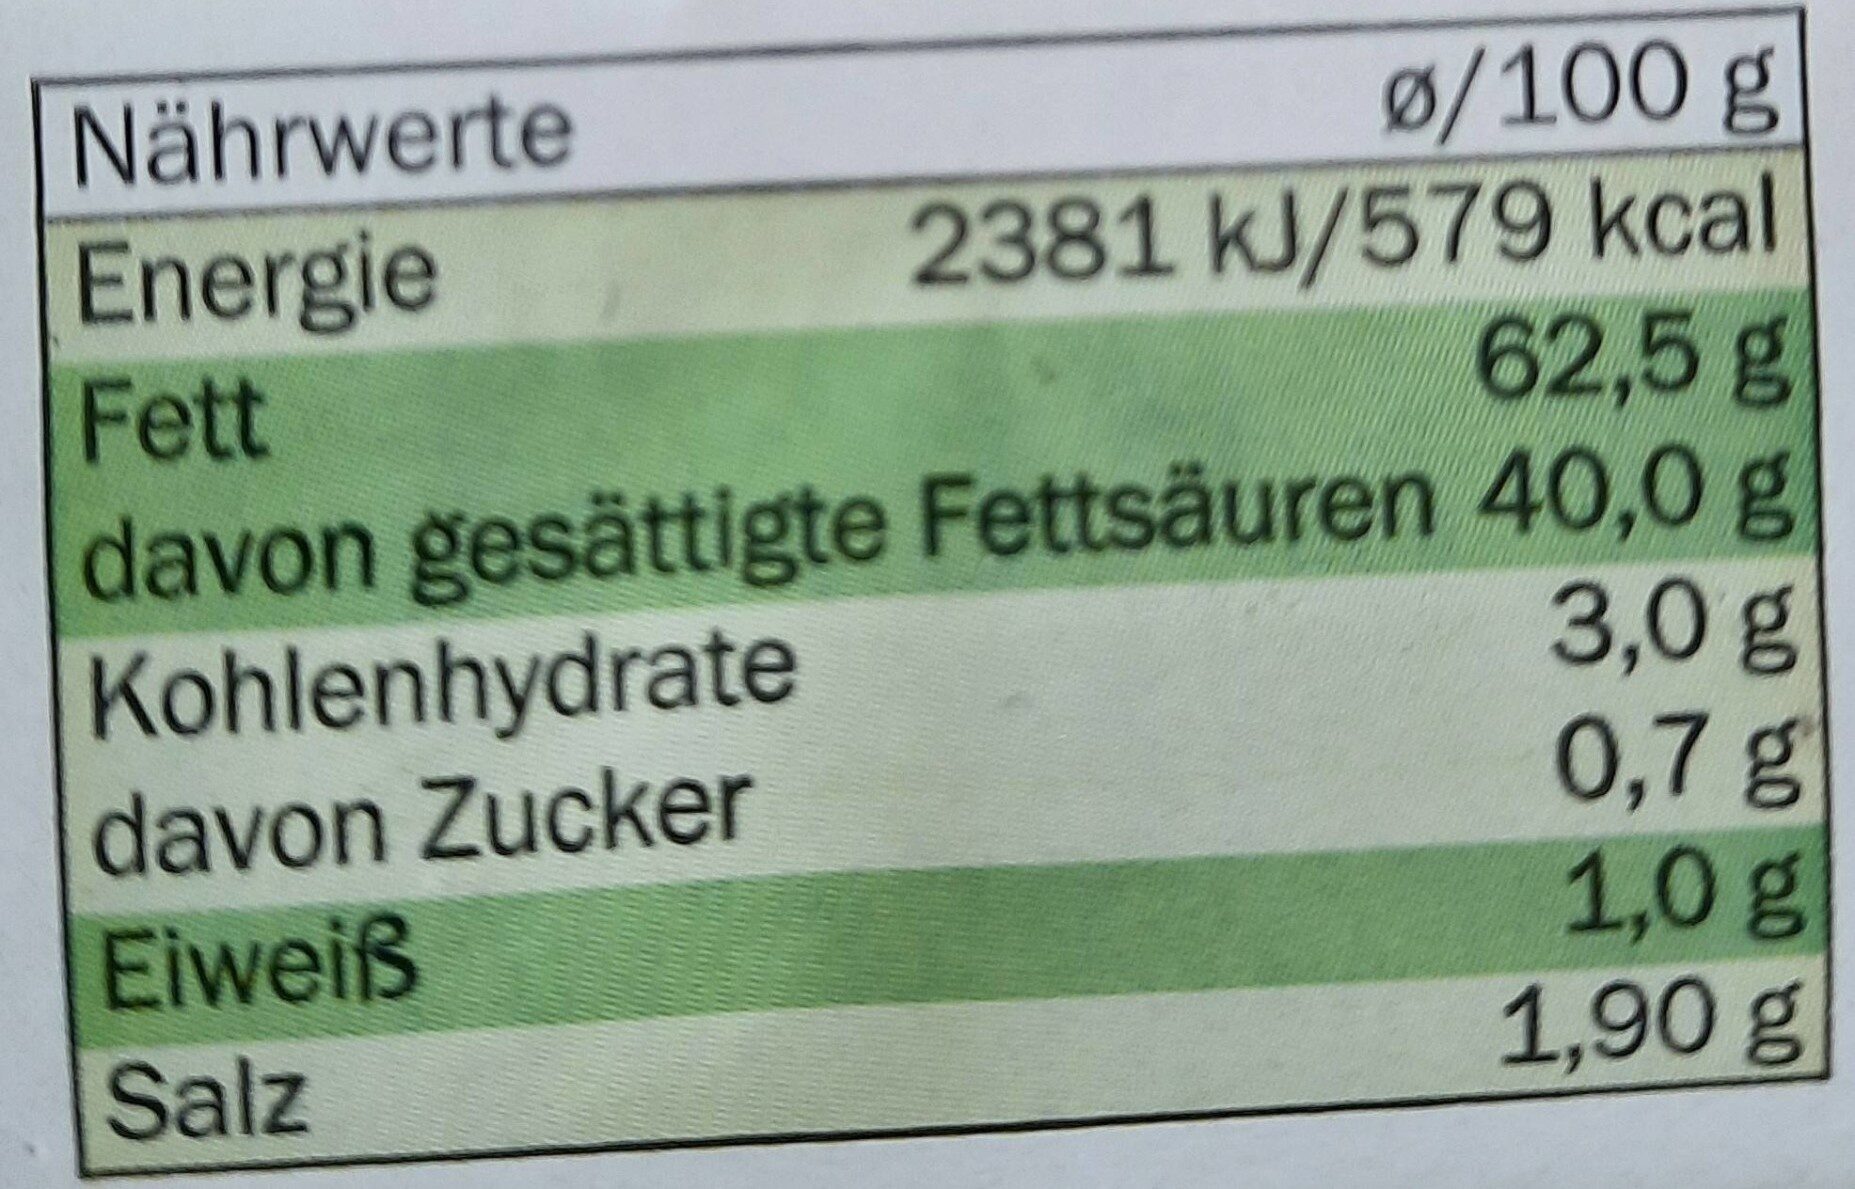 Kräuterbutter 100g - Nutrition facts - en